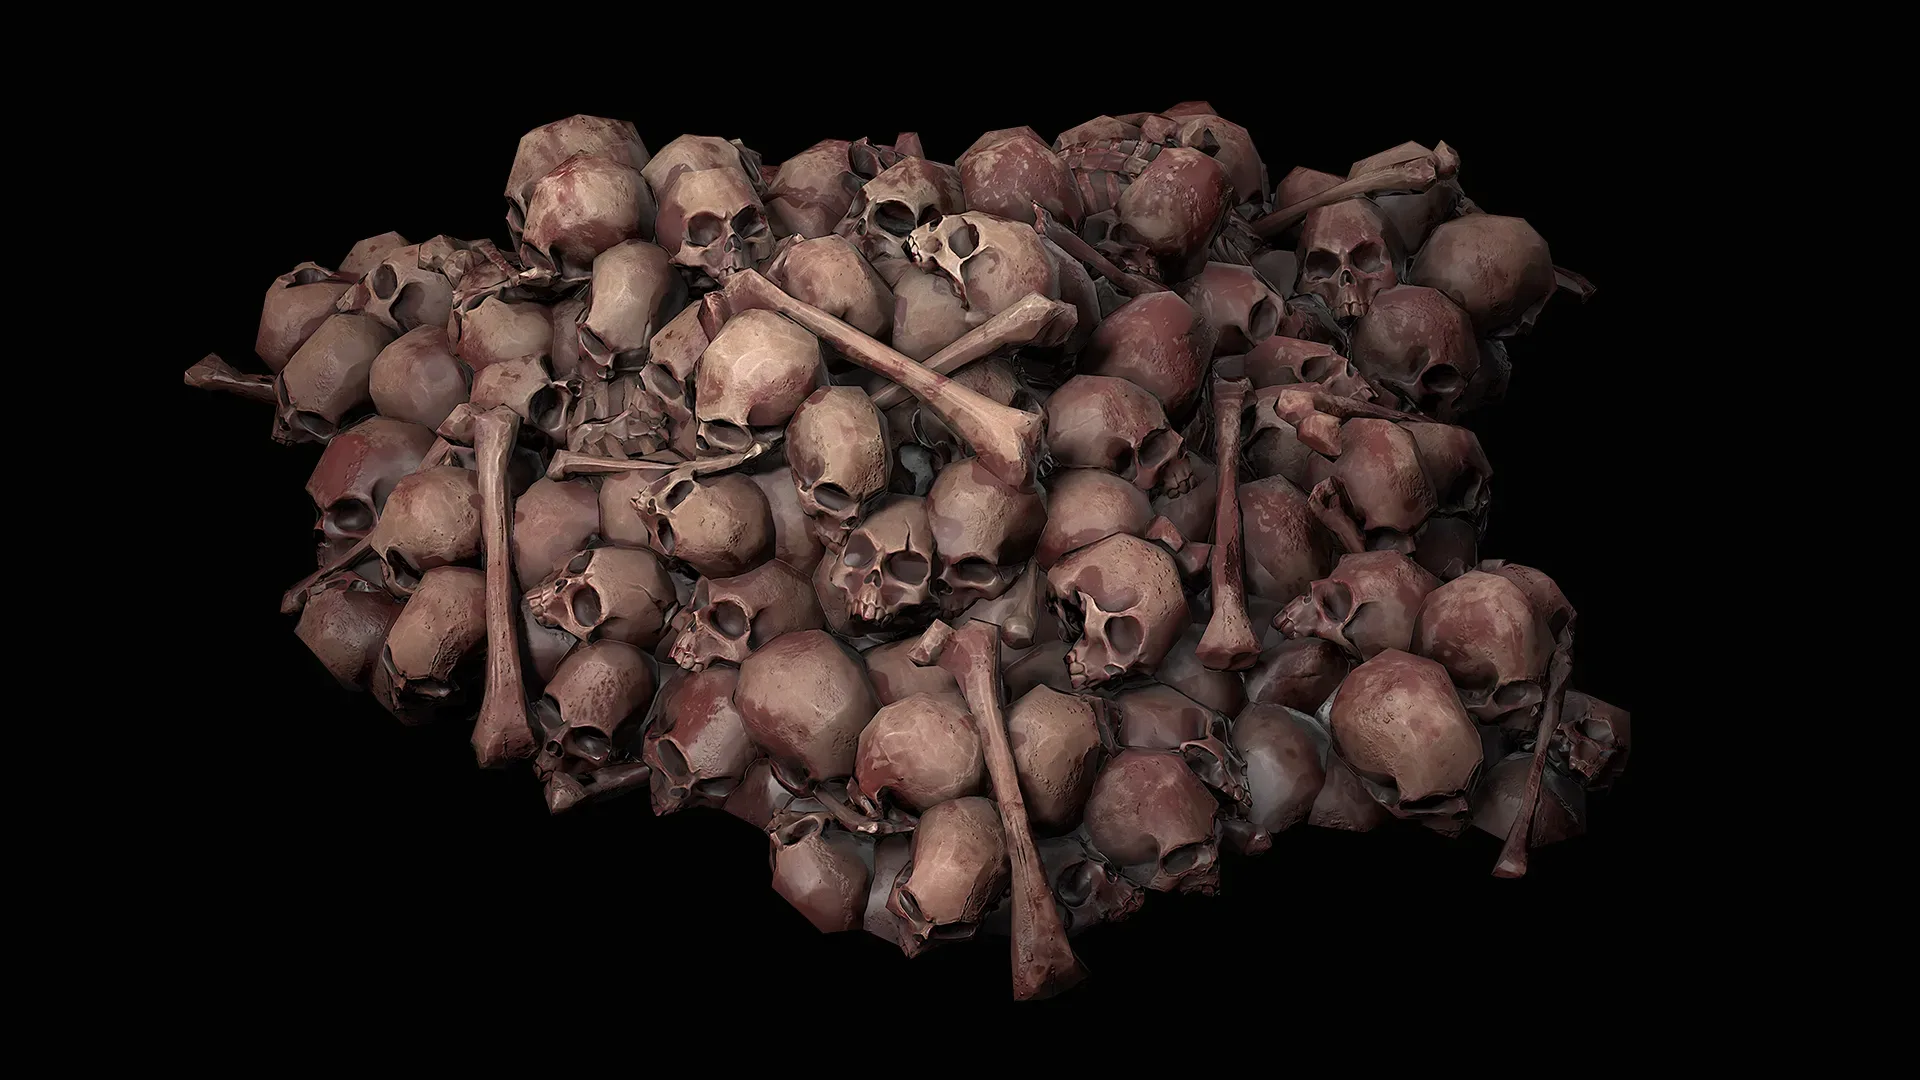 Pile of Bones and Skulls